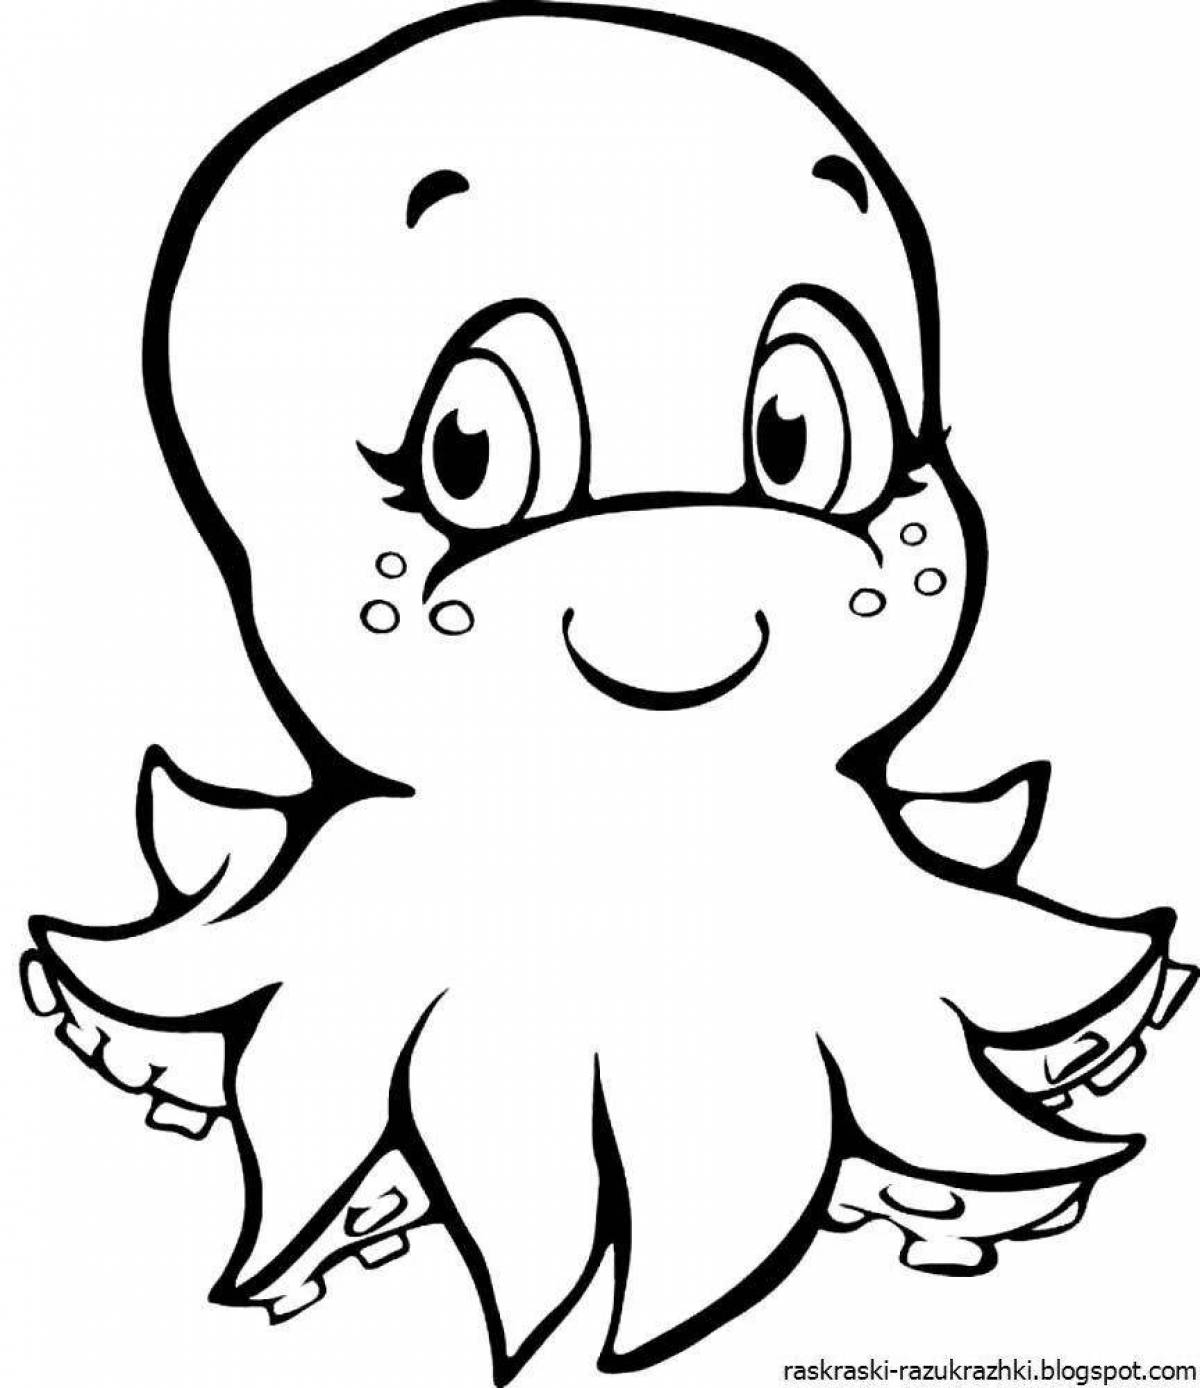 Fun coloring octopus for kids